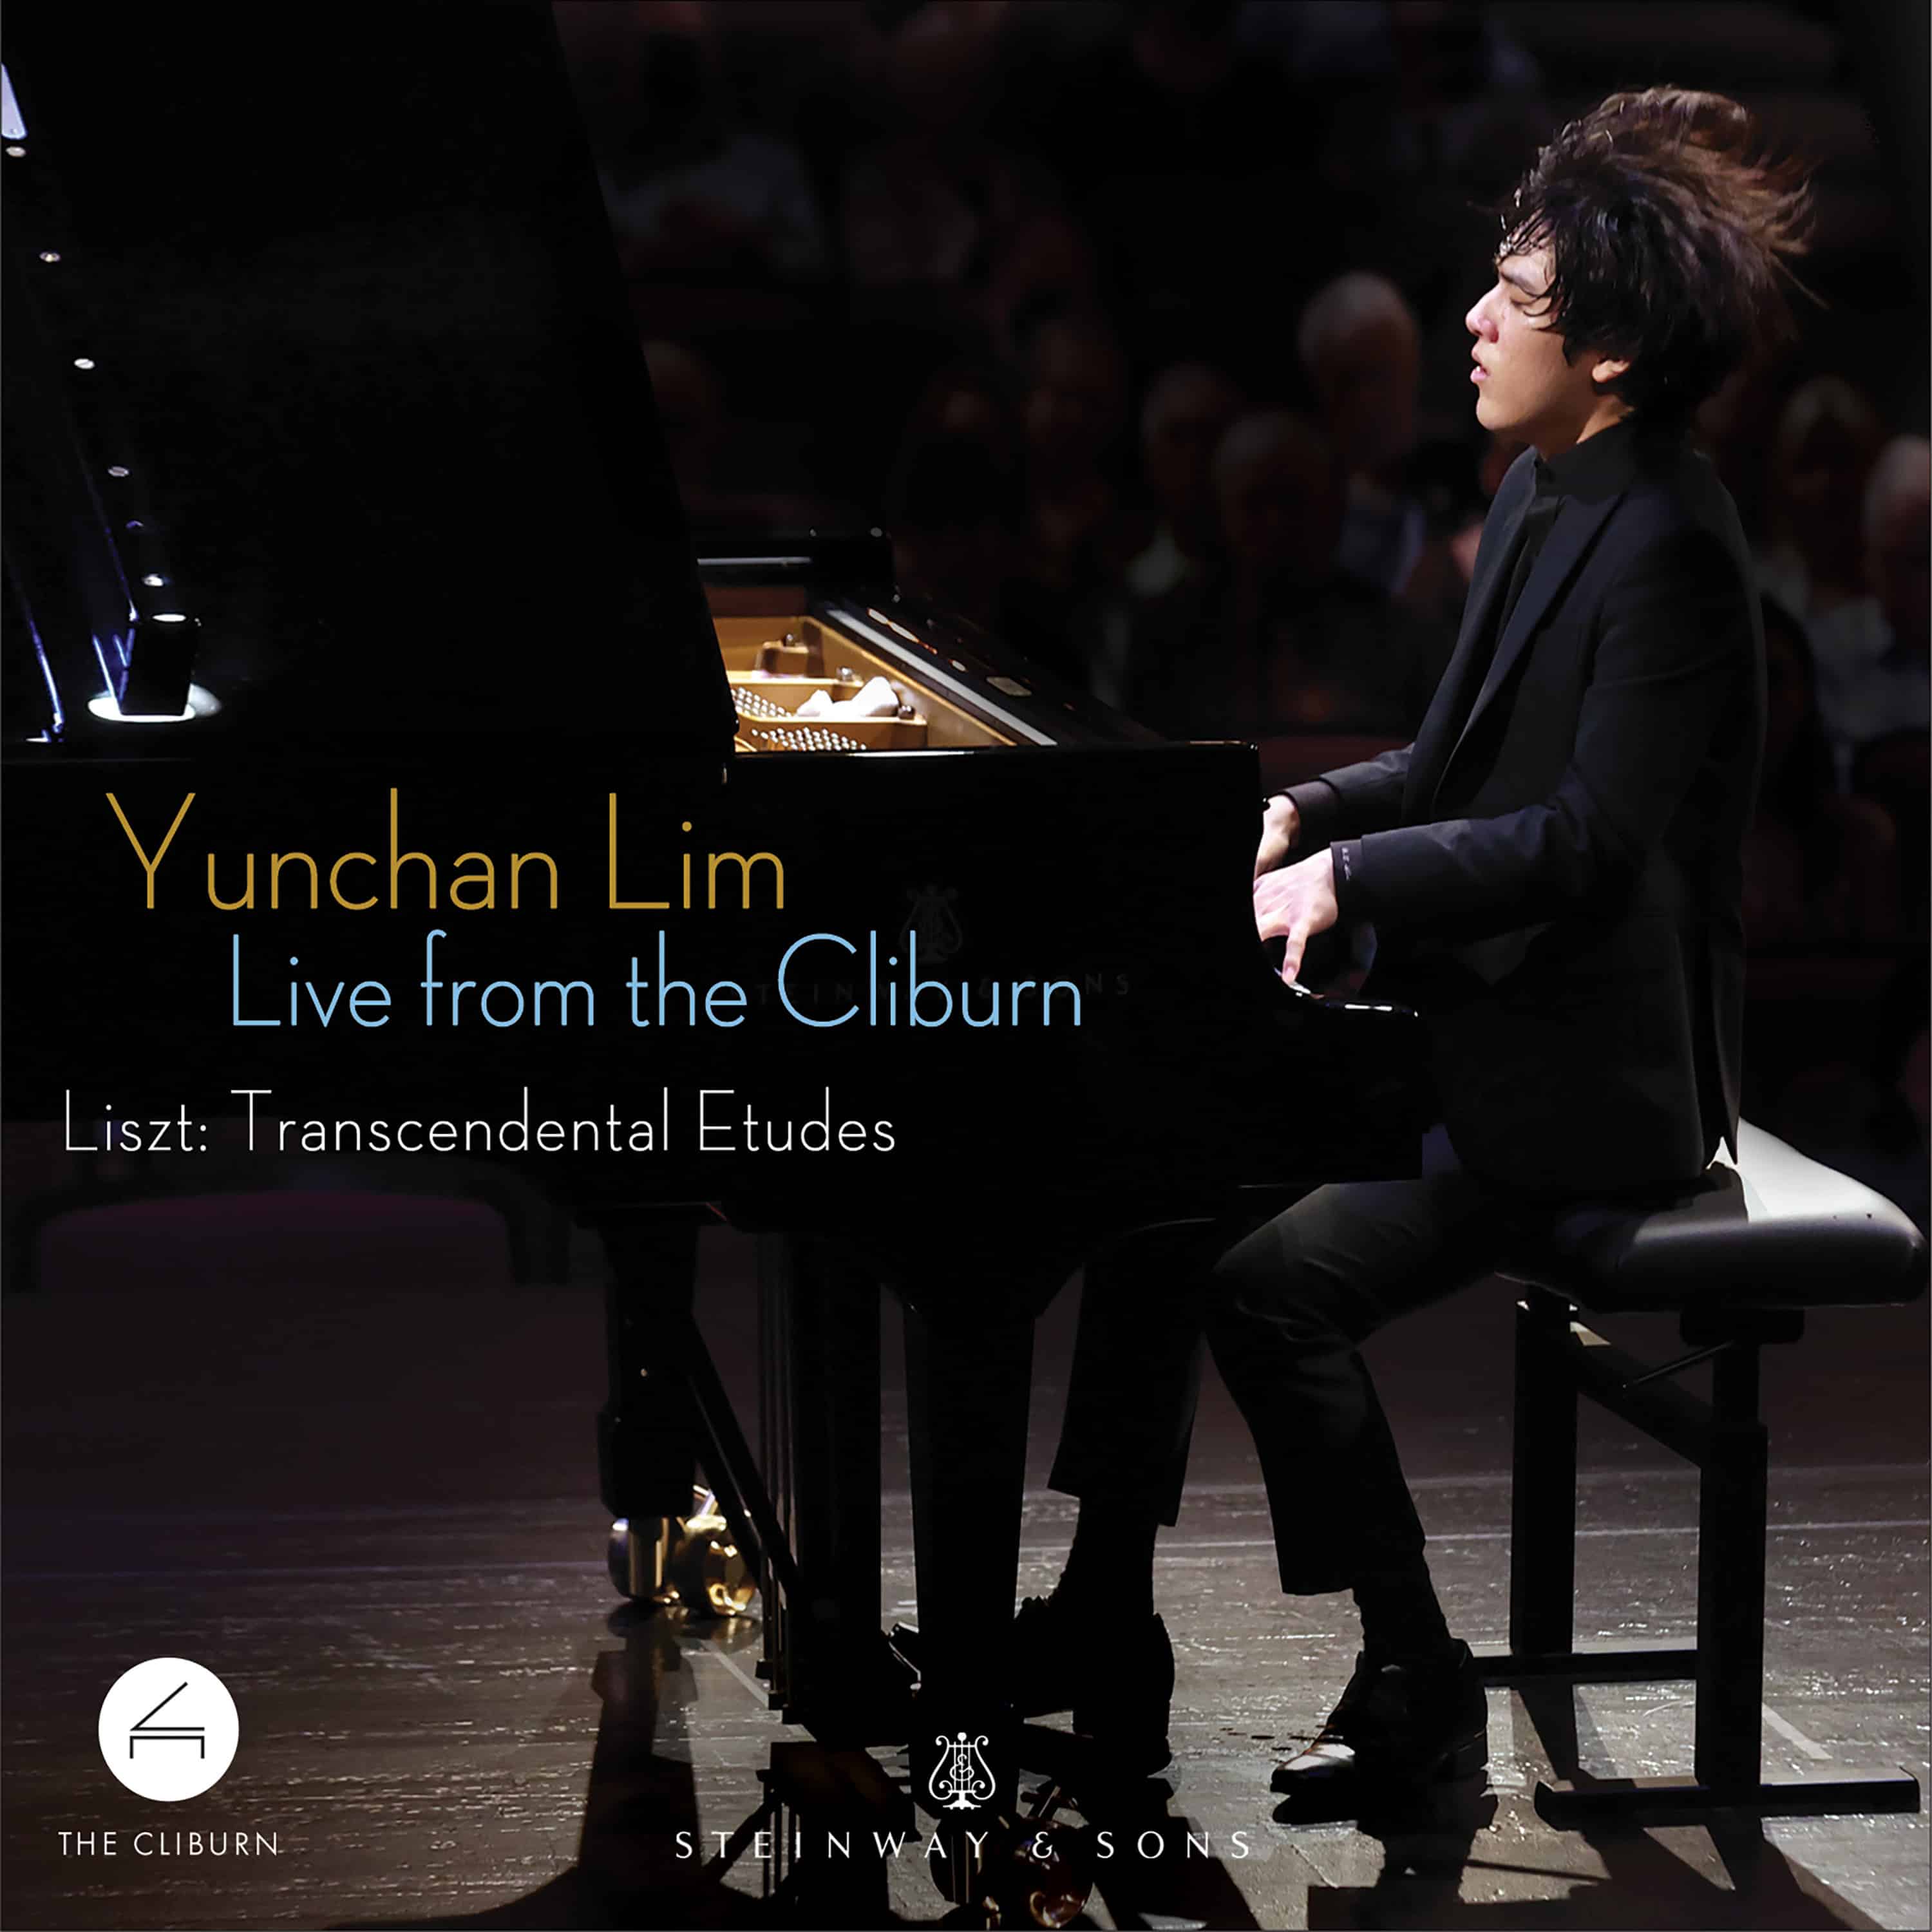 Yunchan Lim finds transcendence